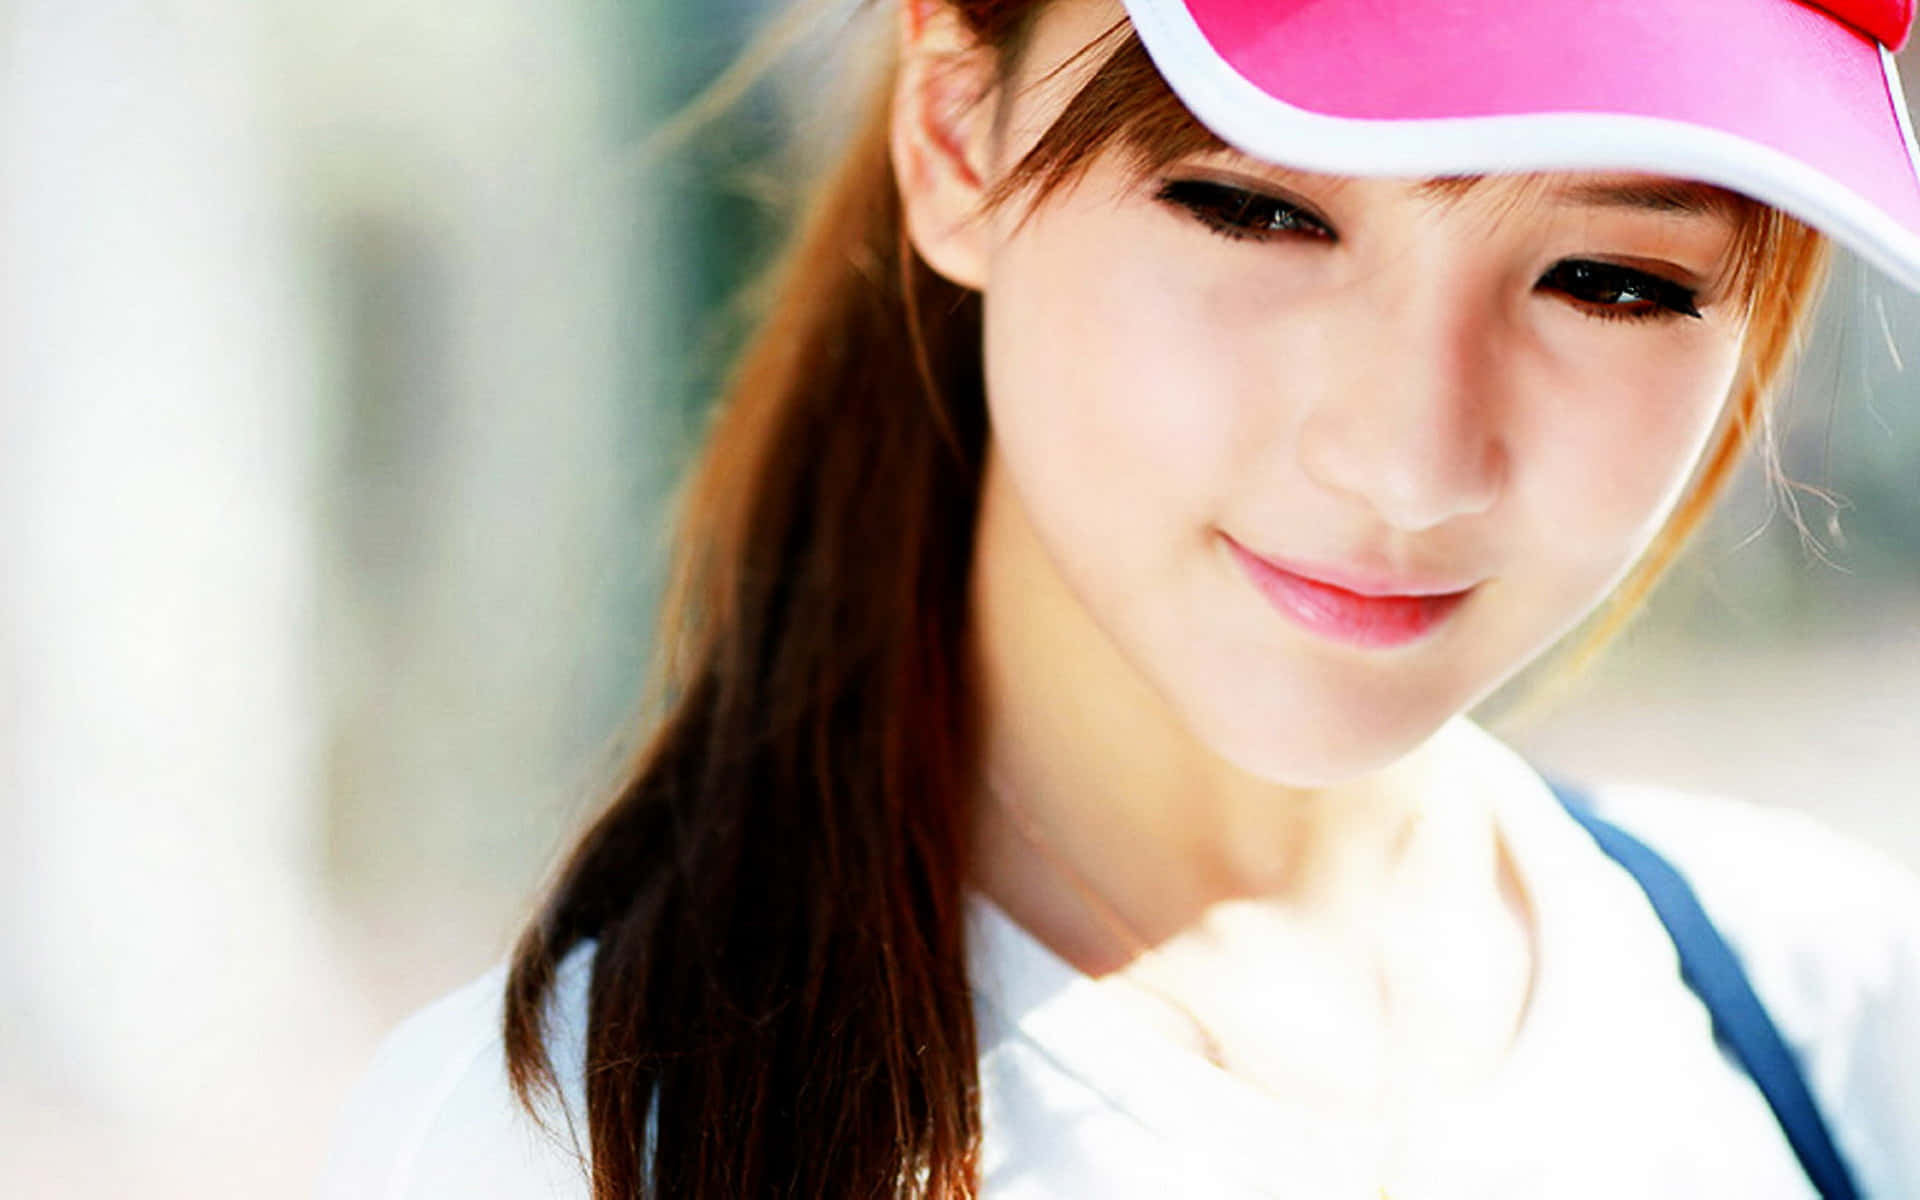 Pretty Girl In A Pink Cap Background